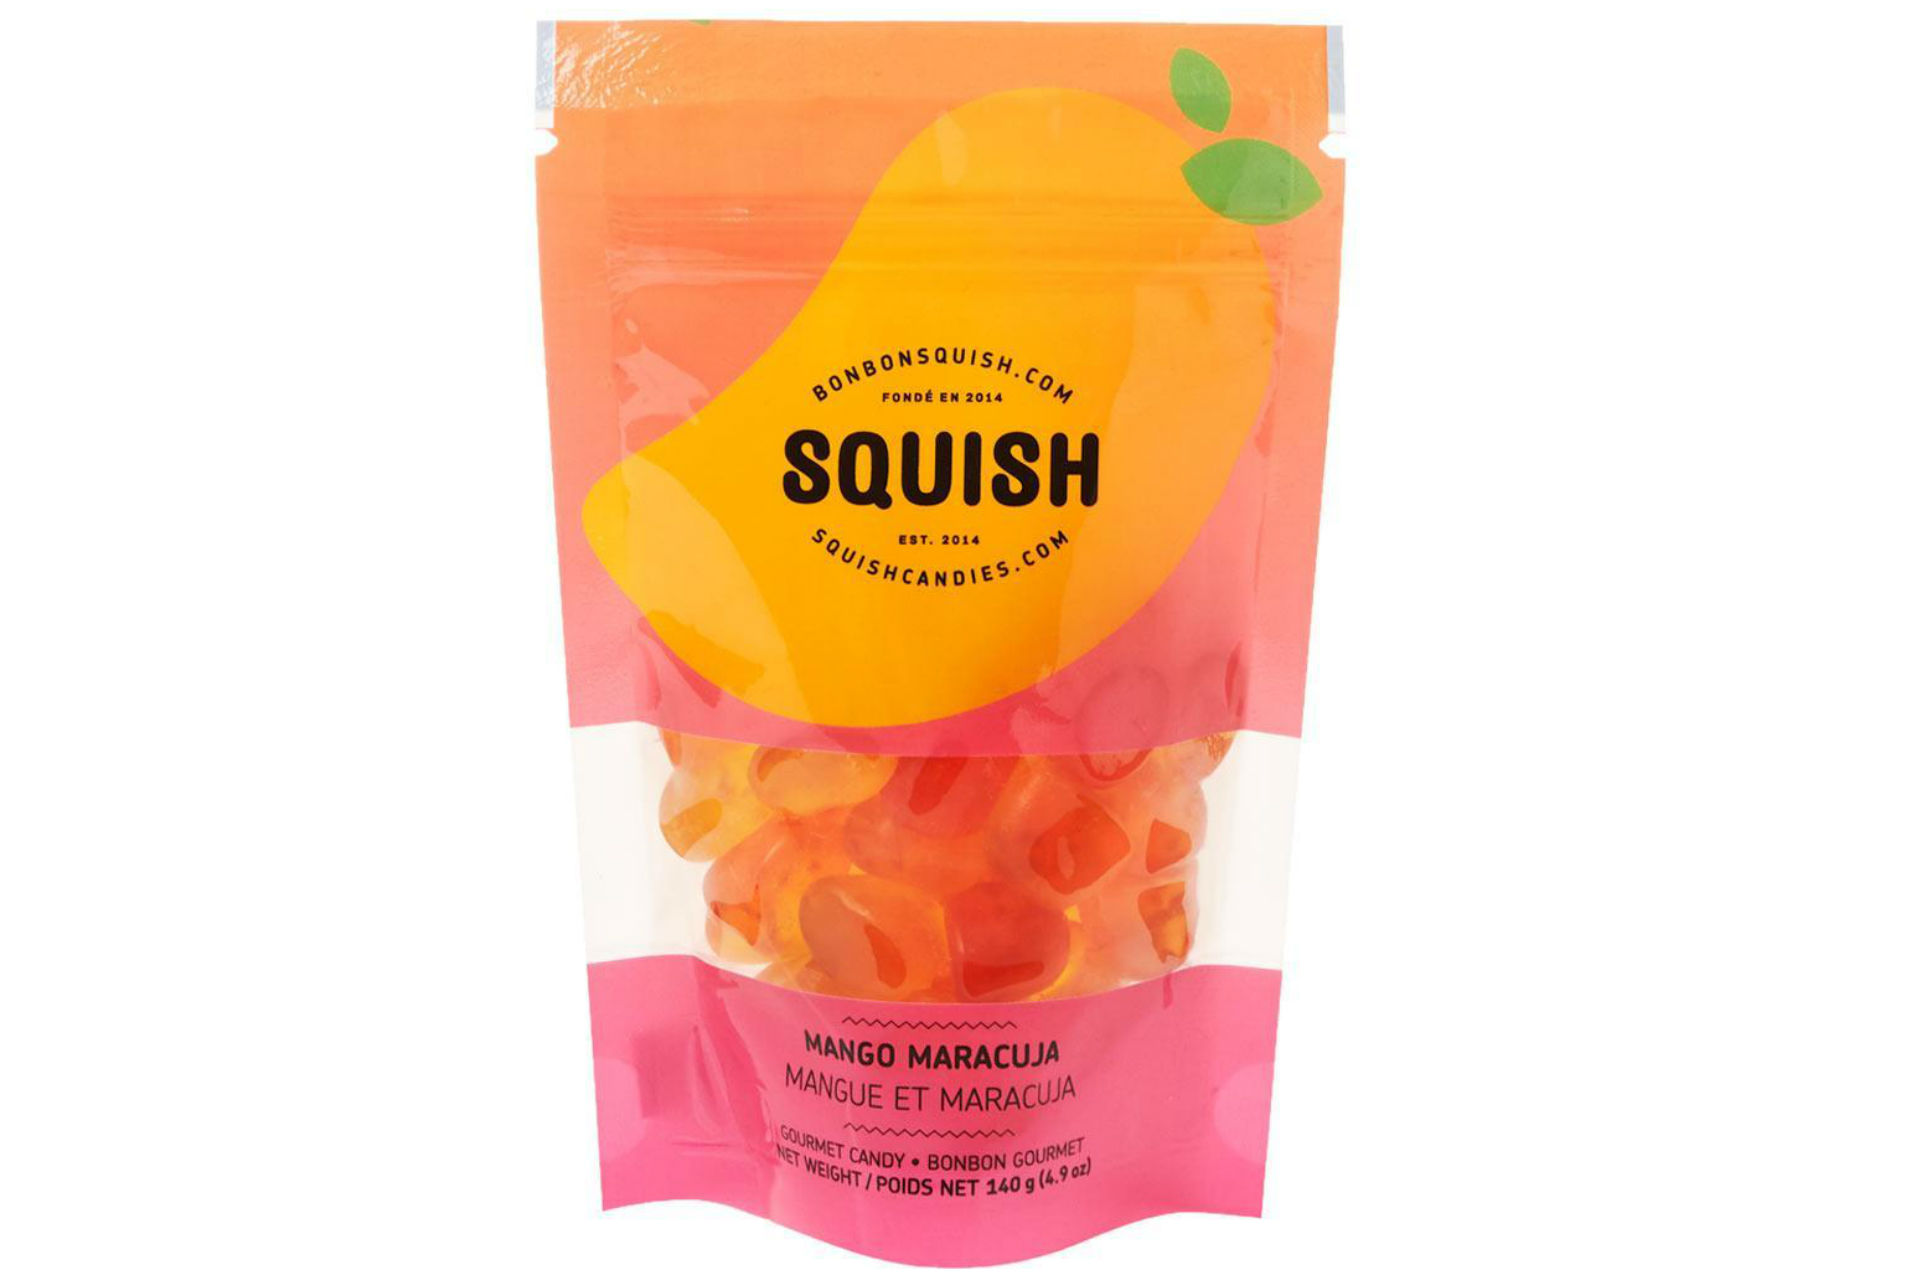 Squish Mango Maracuja candies